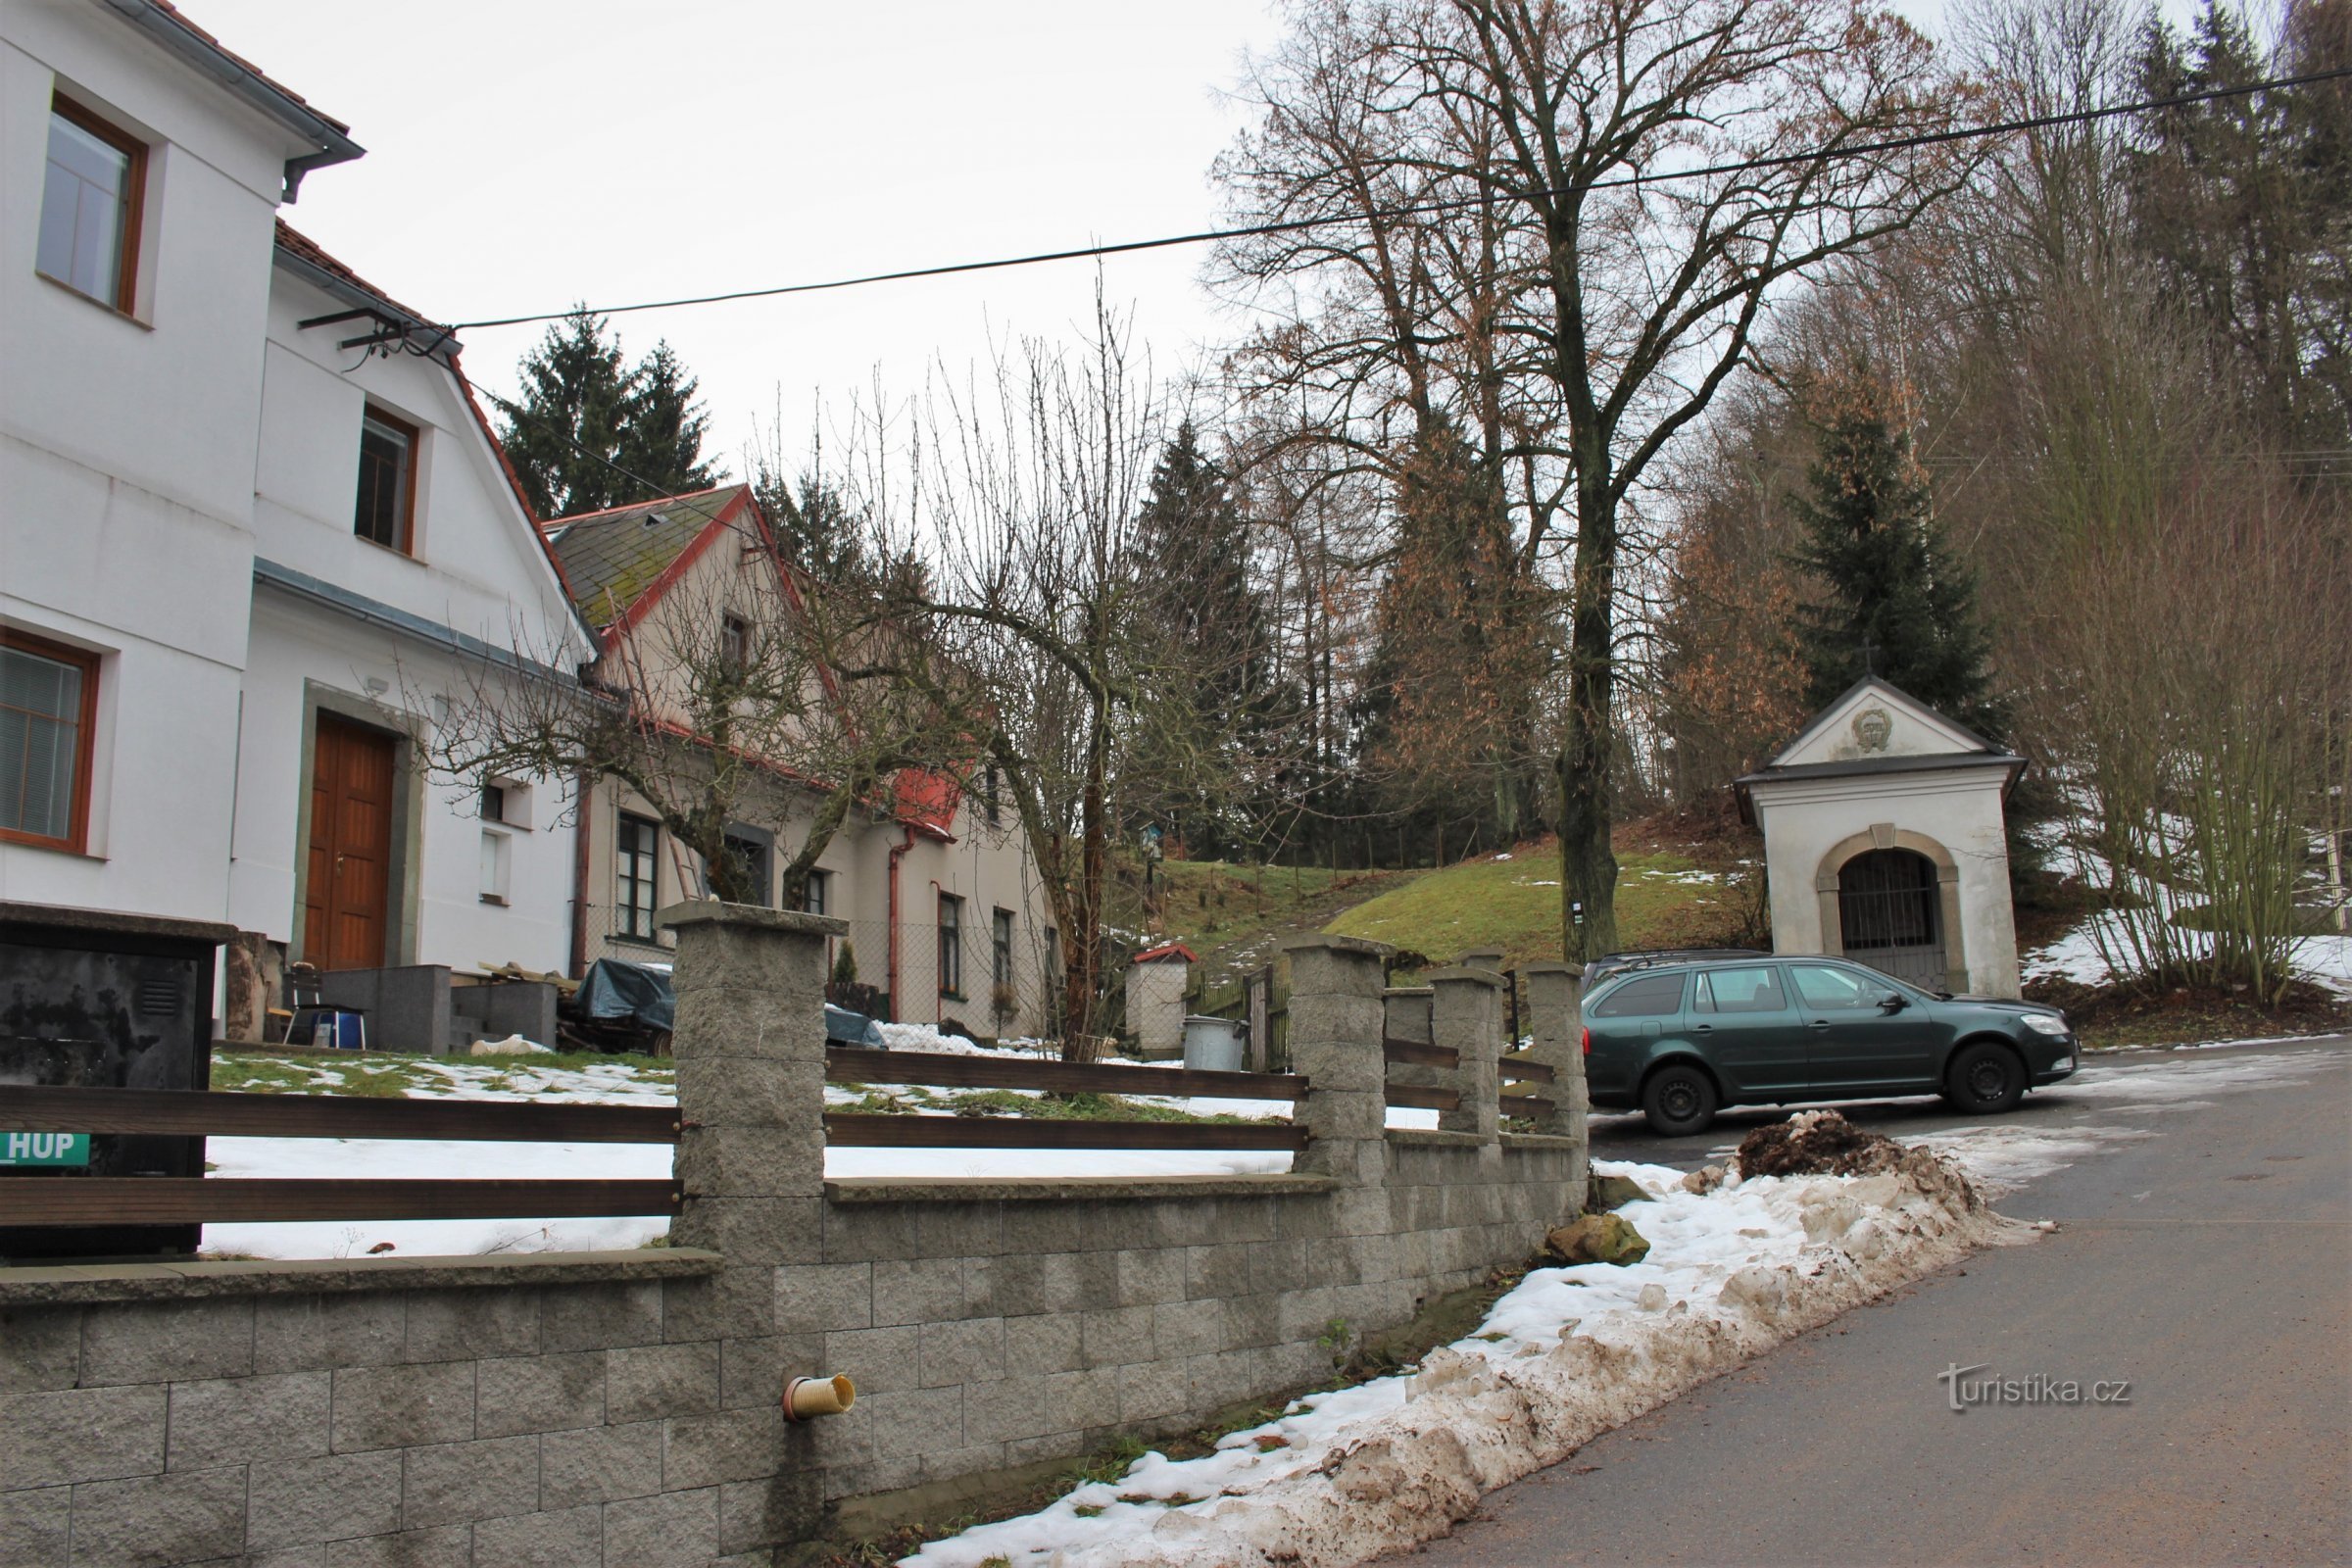 J. Štyrsy Street の終点は、十字架の道の XNUMX 番目の停留所です。